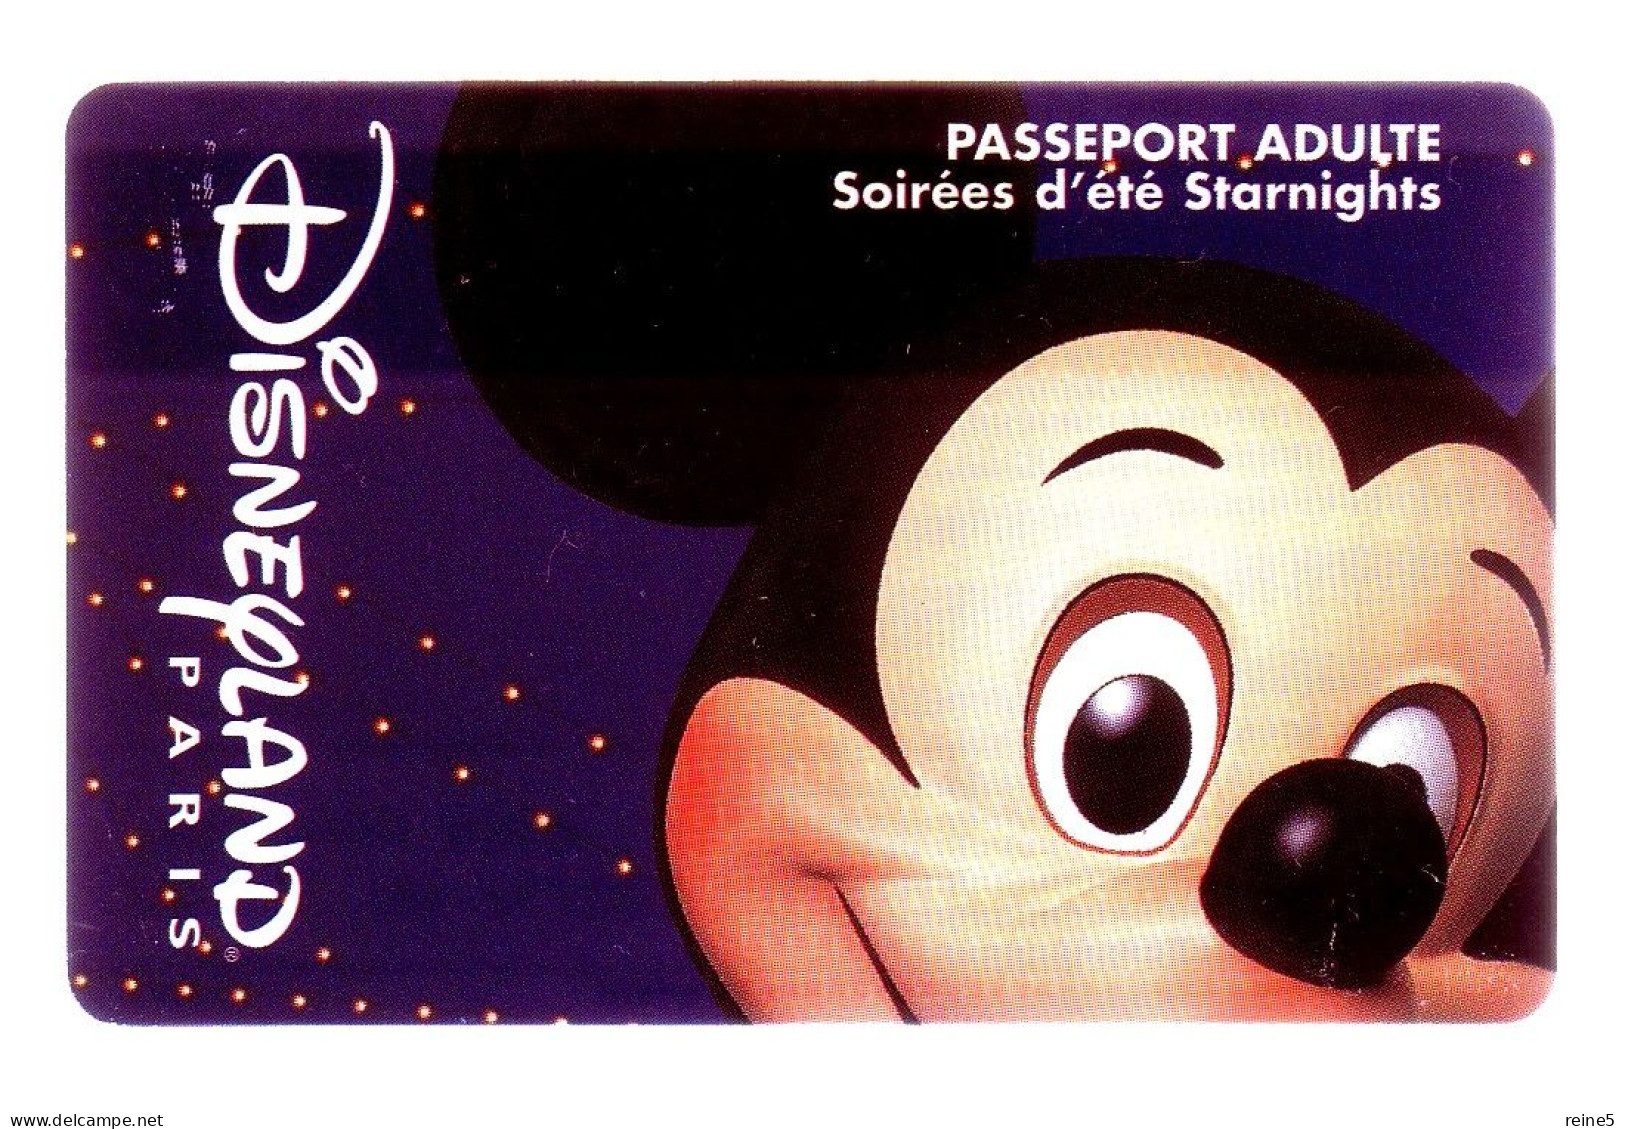 PASSEPORT ADULTE MICKEY SOIREES D'ETE STARNIGHTS DISNEYLAND PARIS -TRES BON ETAT -REF-PASS DISNEY-14 - Passeports Disney